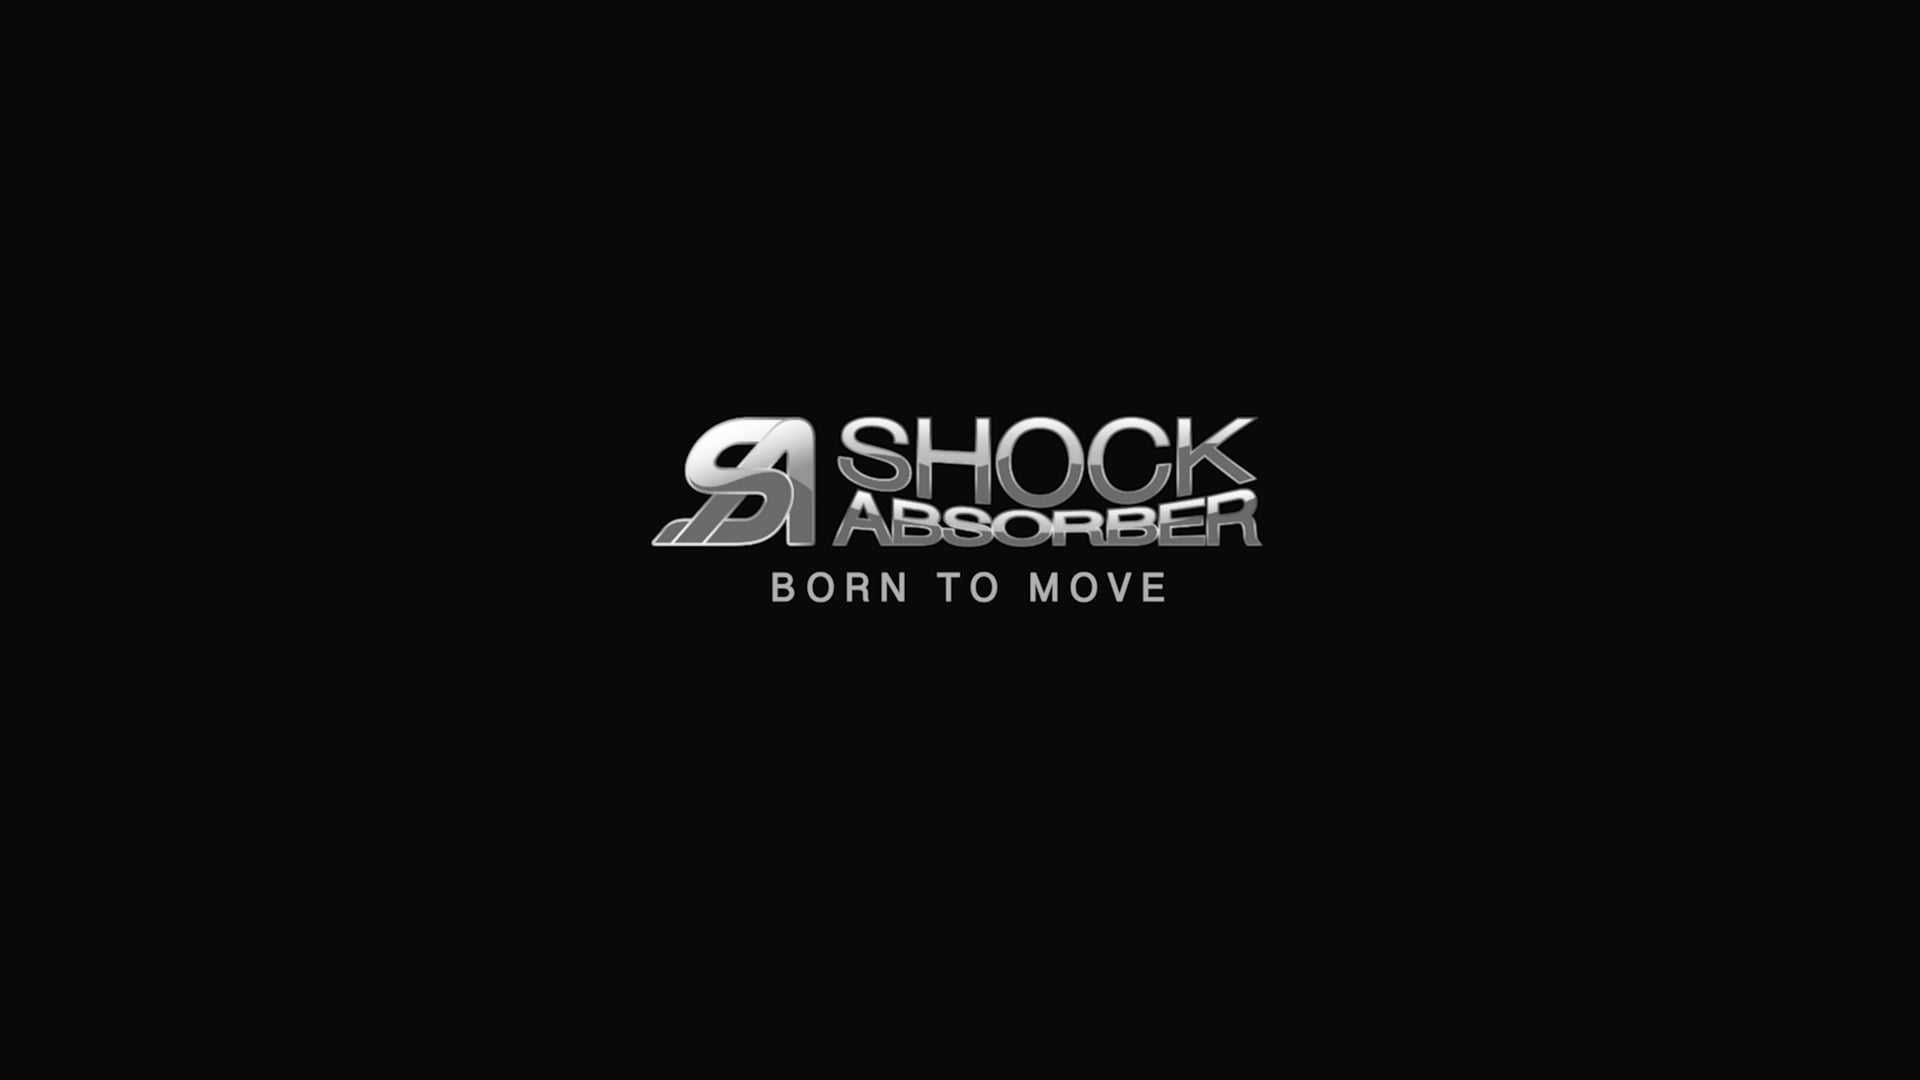 Shock Absorber - Shock Your System